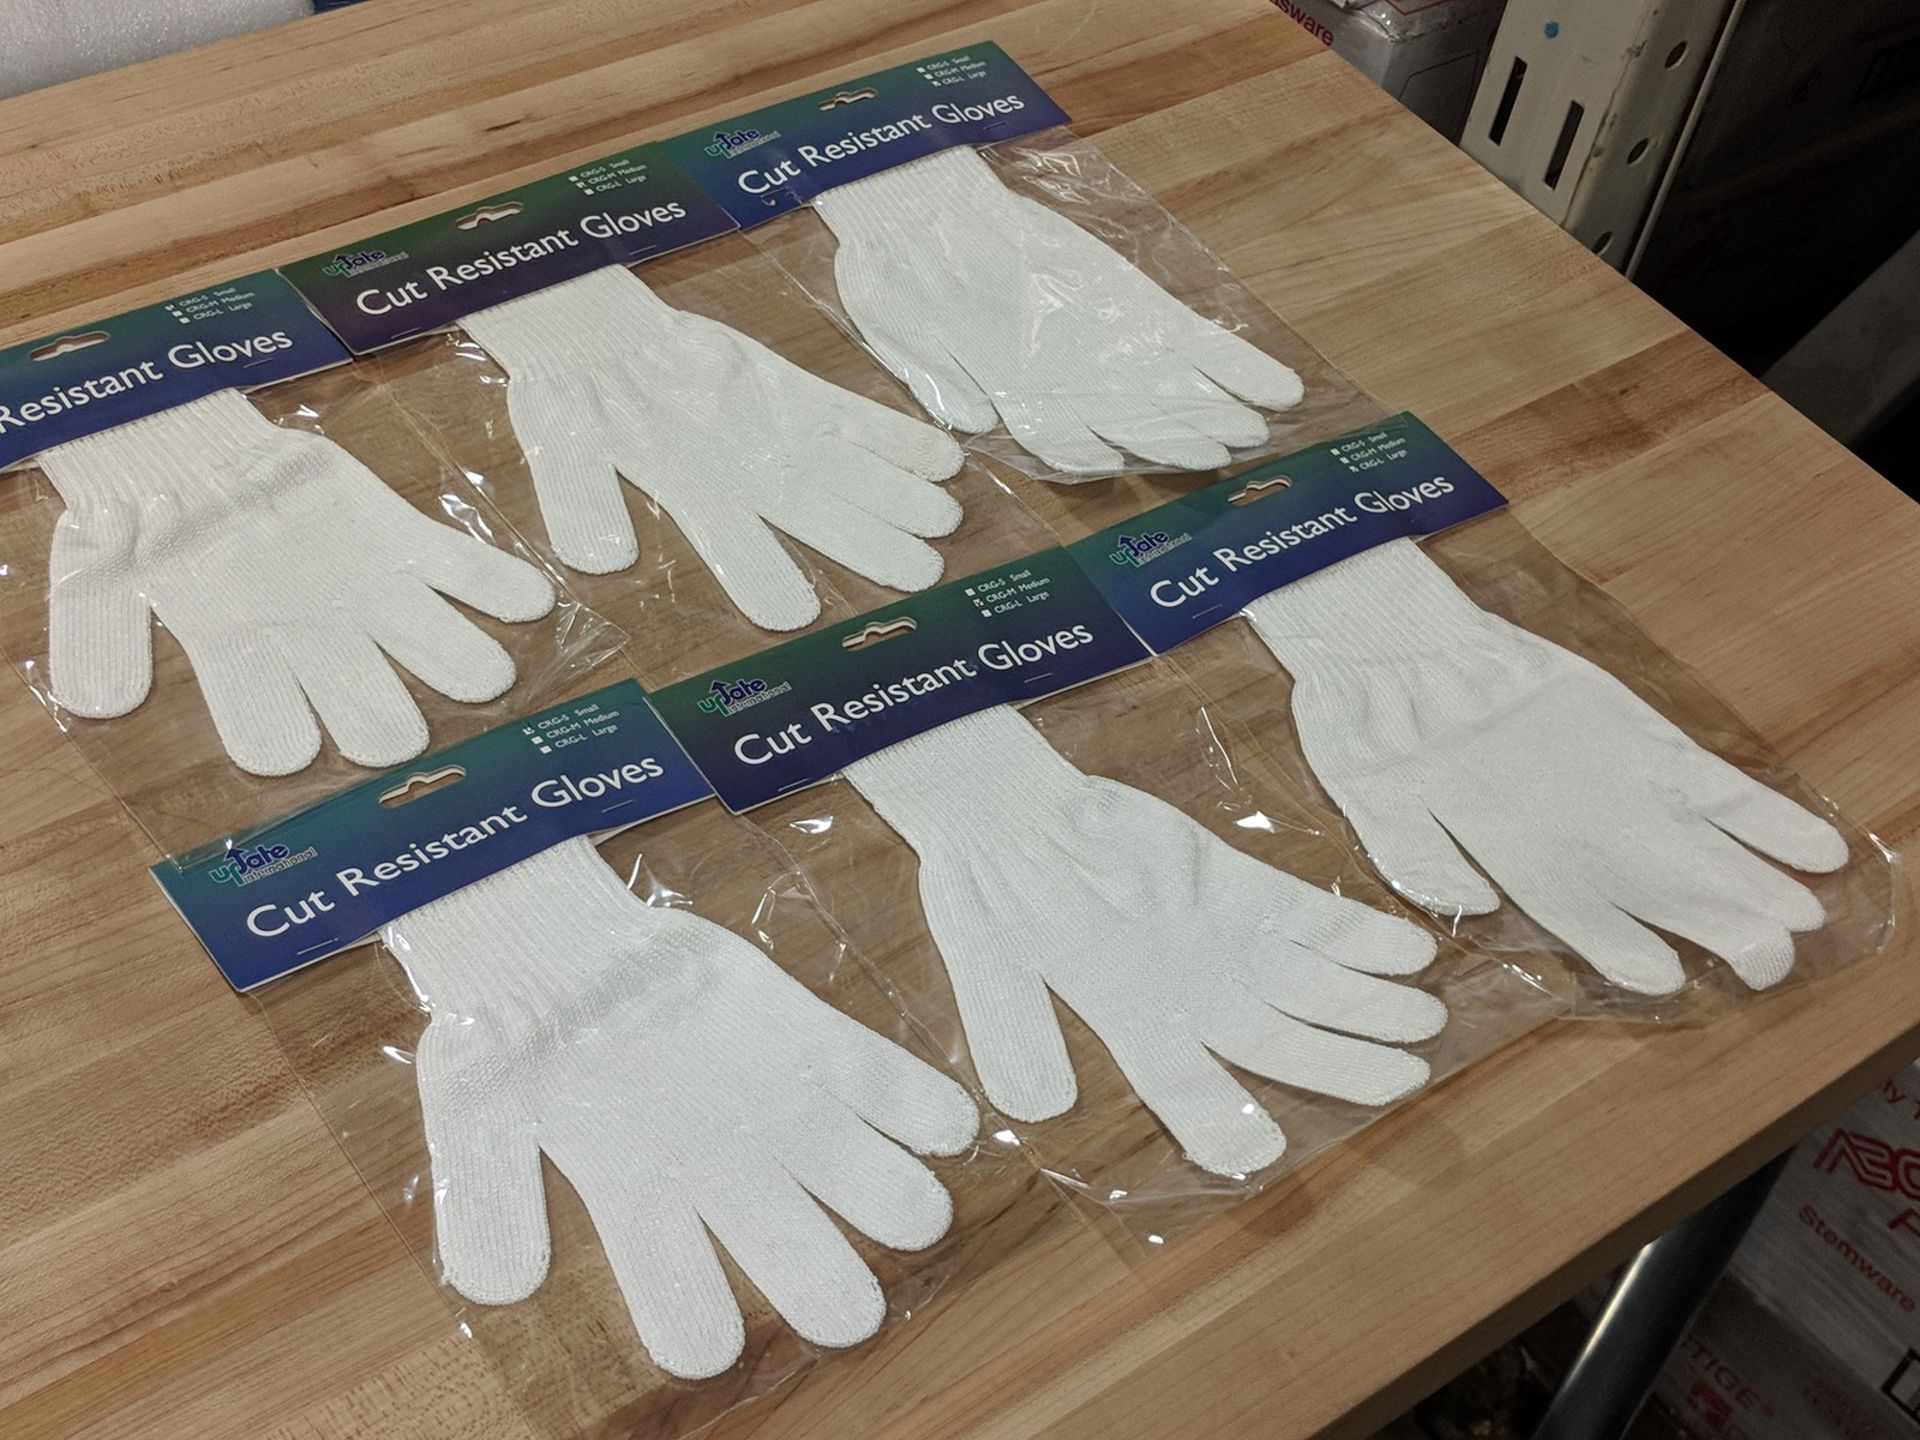 Medium (9.5") Cut-Resistant Gloves - Lot of 2 - Image 2 of 2